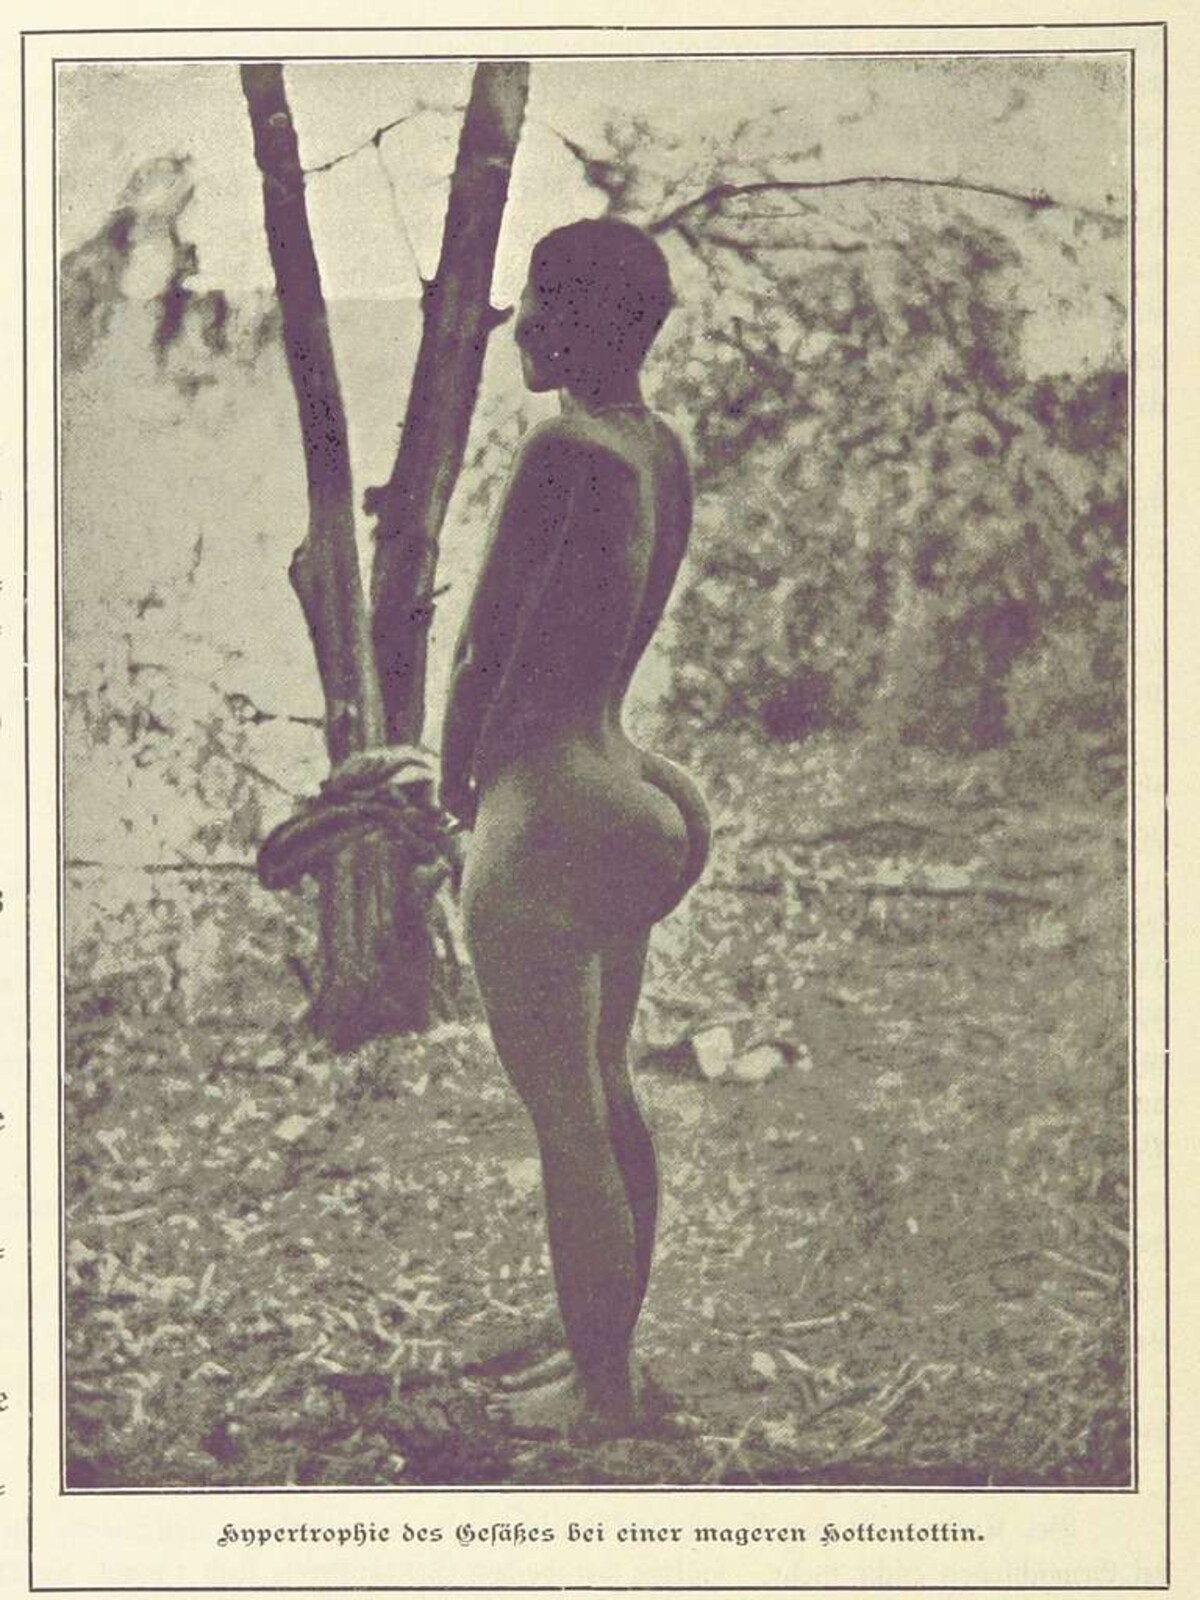 Ilustračná fotografia steatopýgie z roku 1869.